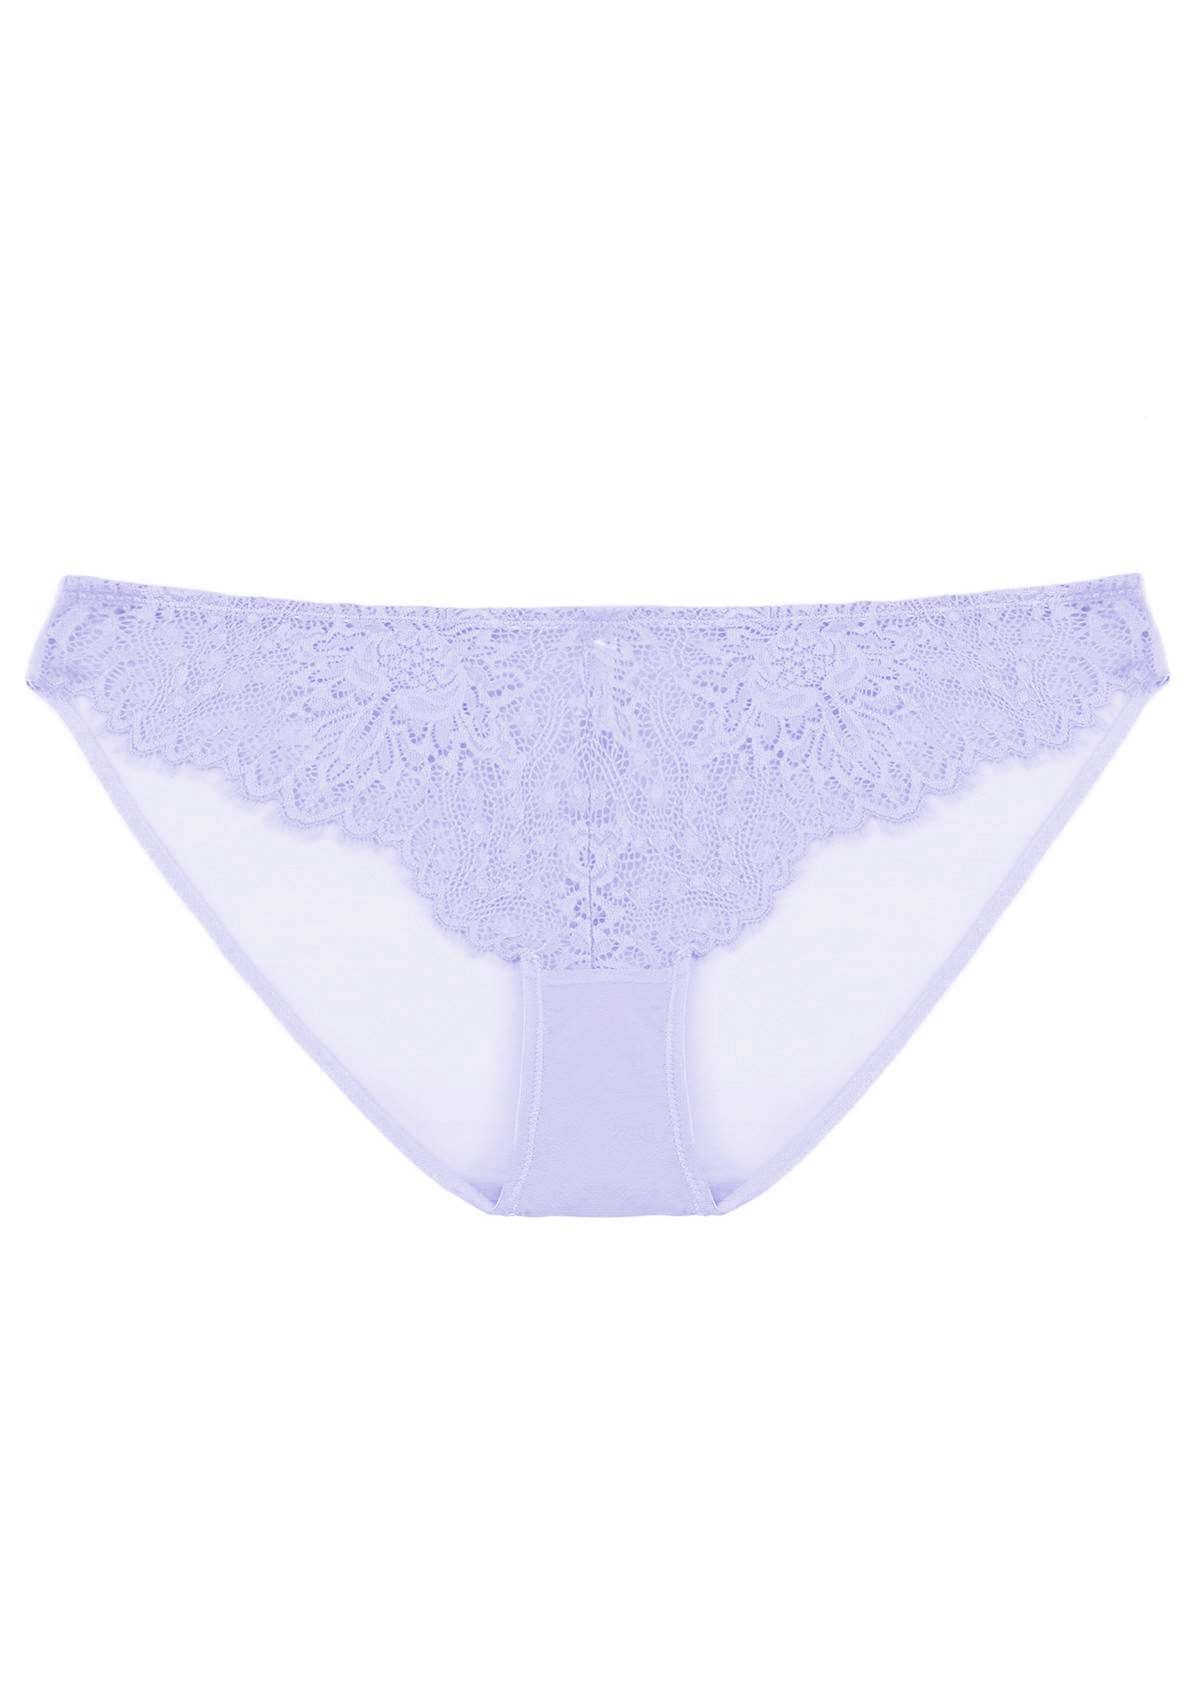 HSIA Sunflower Exquisite Lace Bikini Underwear - XL / White